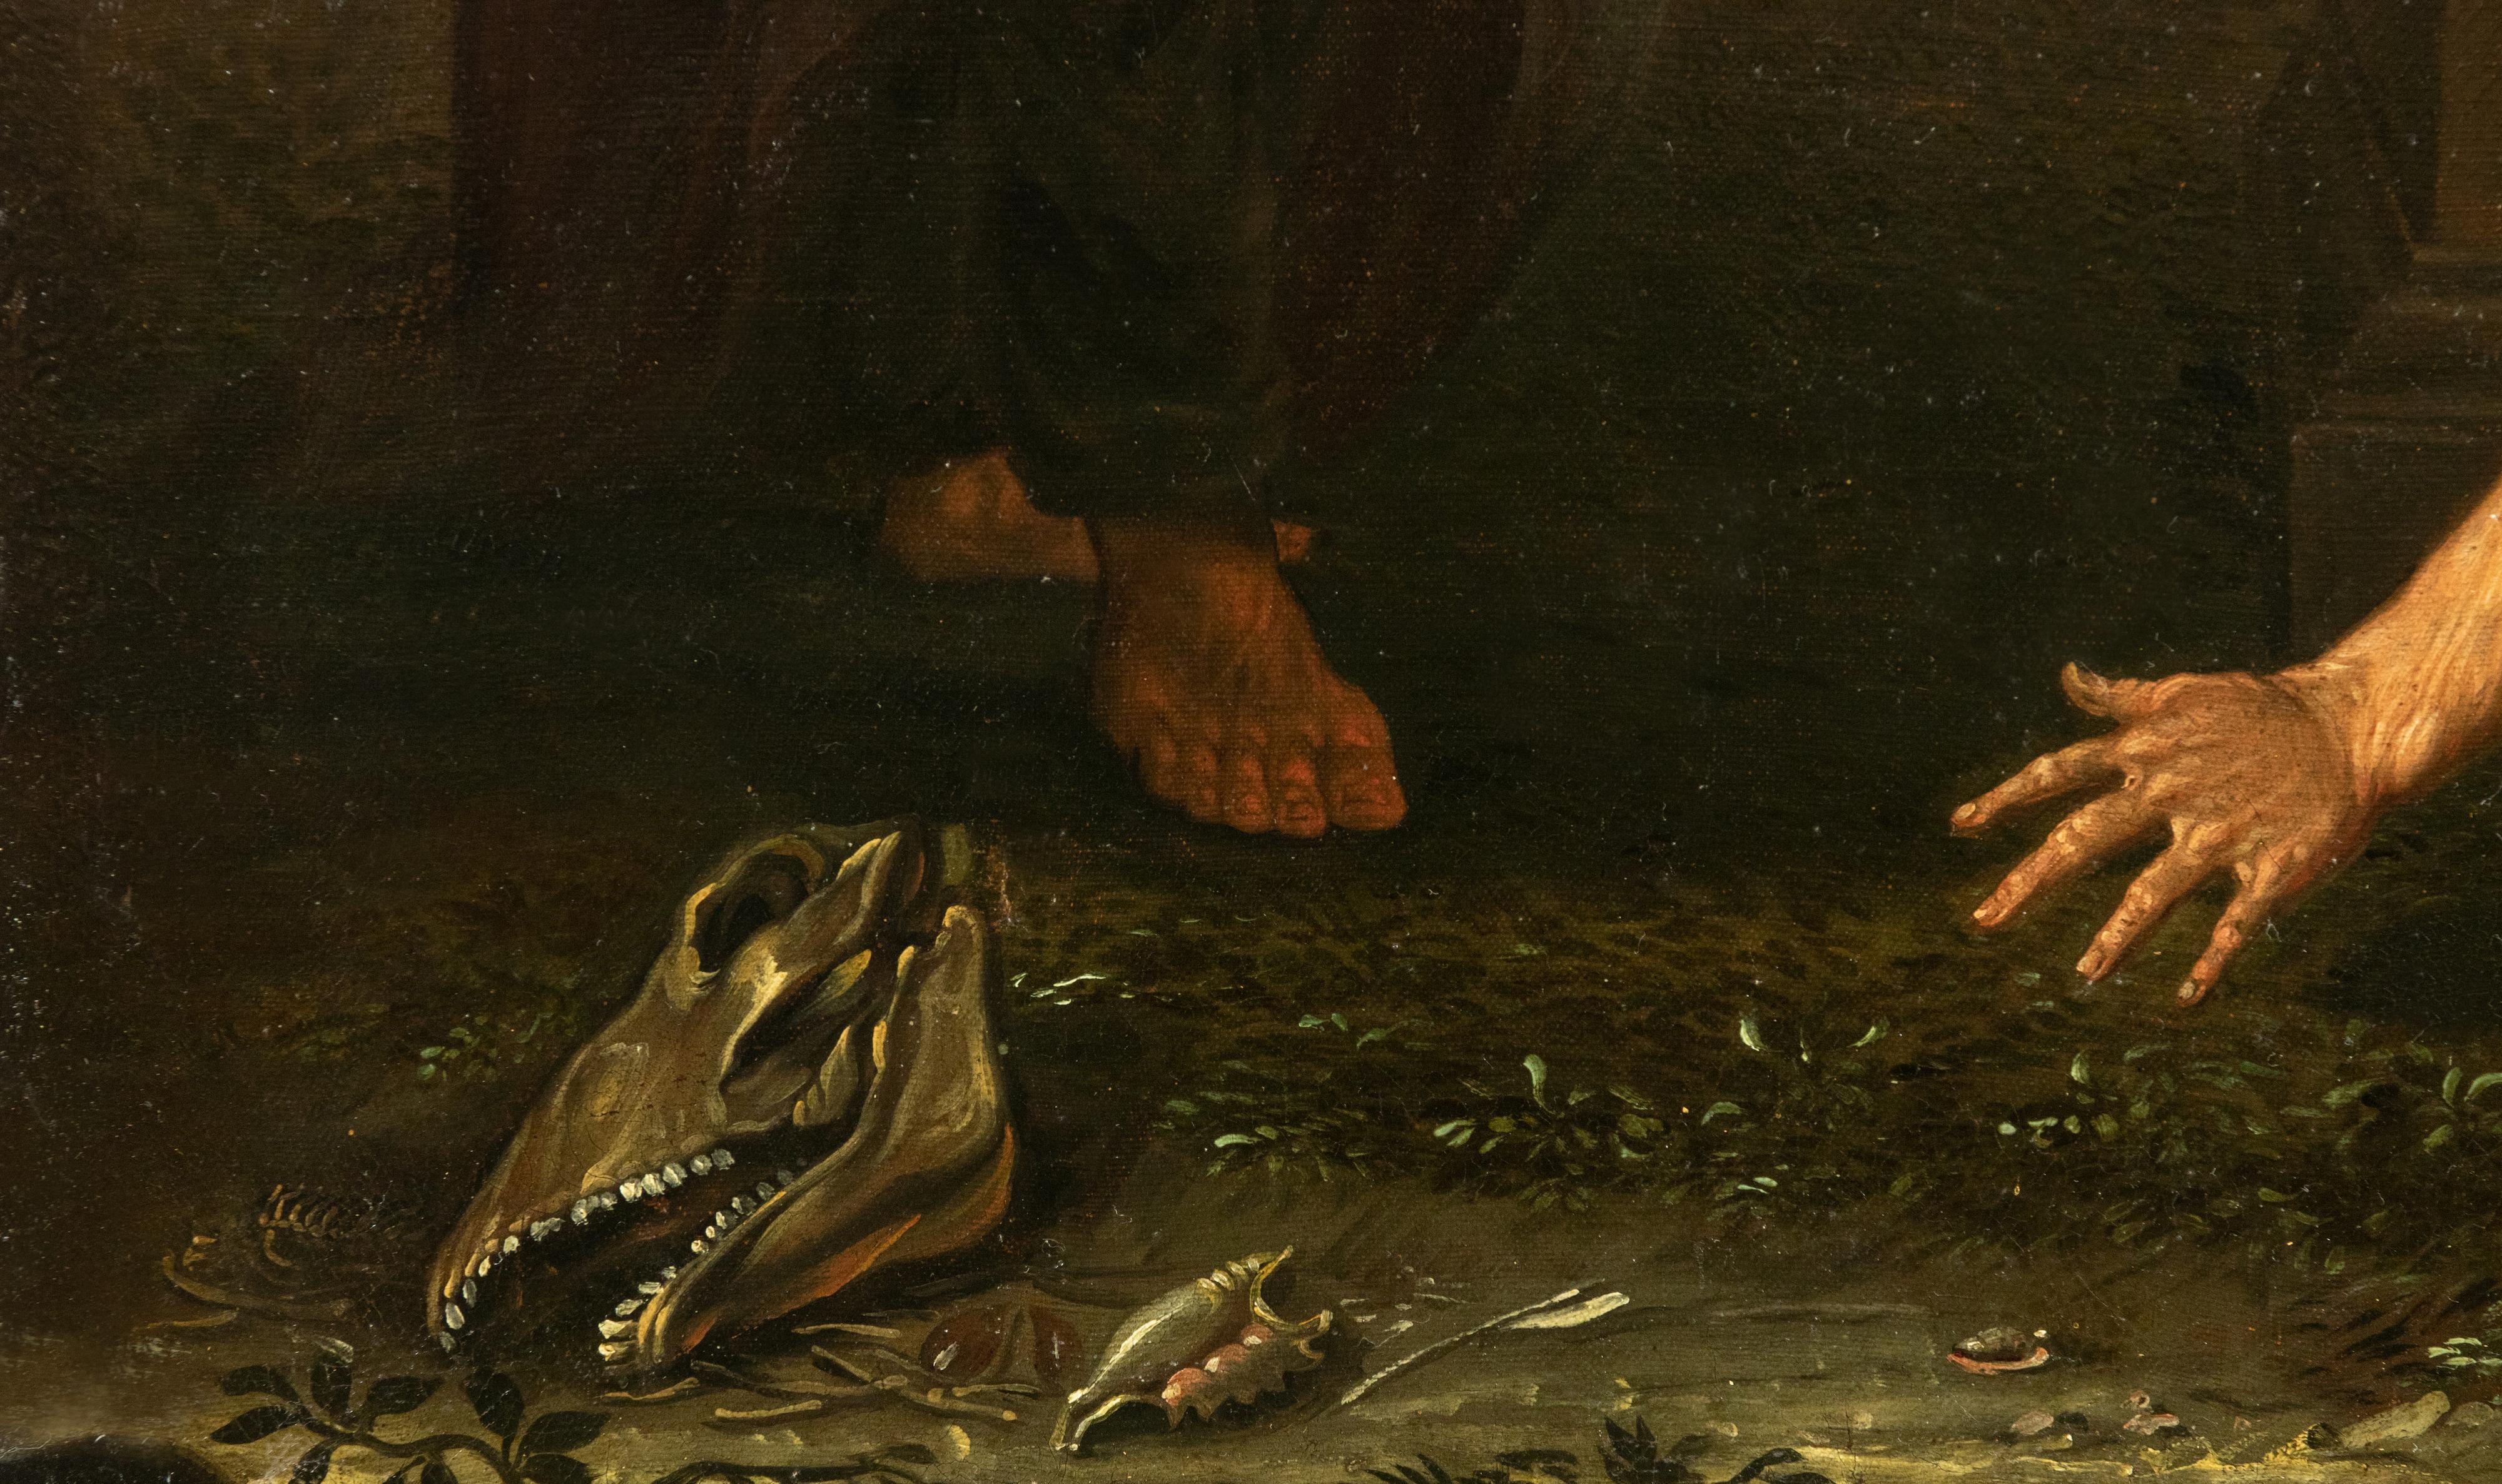 The Witch of Endor - Peinture à l'huile - Fin du 18e siècle - Painting de Georg Andreas Wolfgang